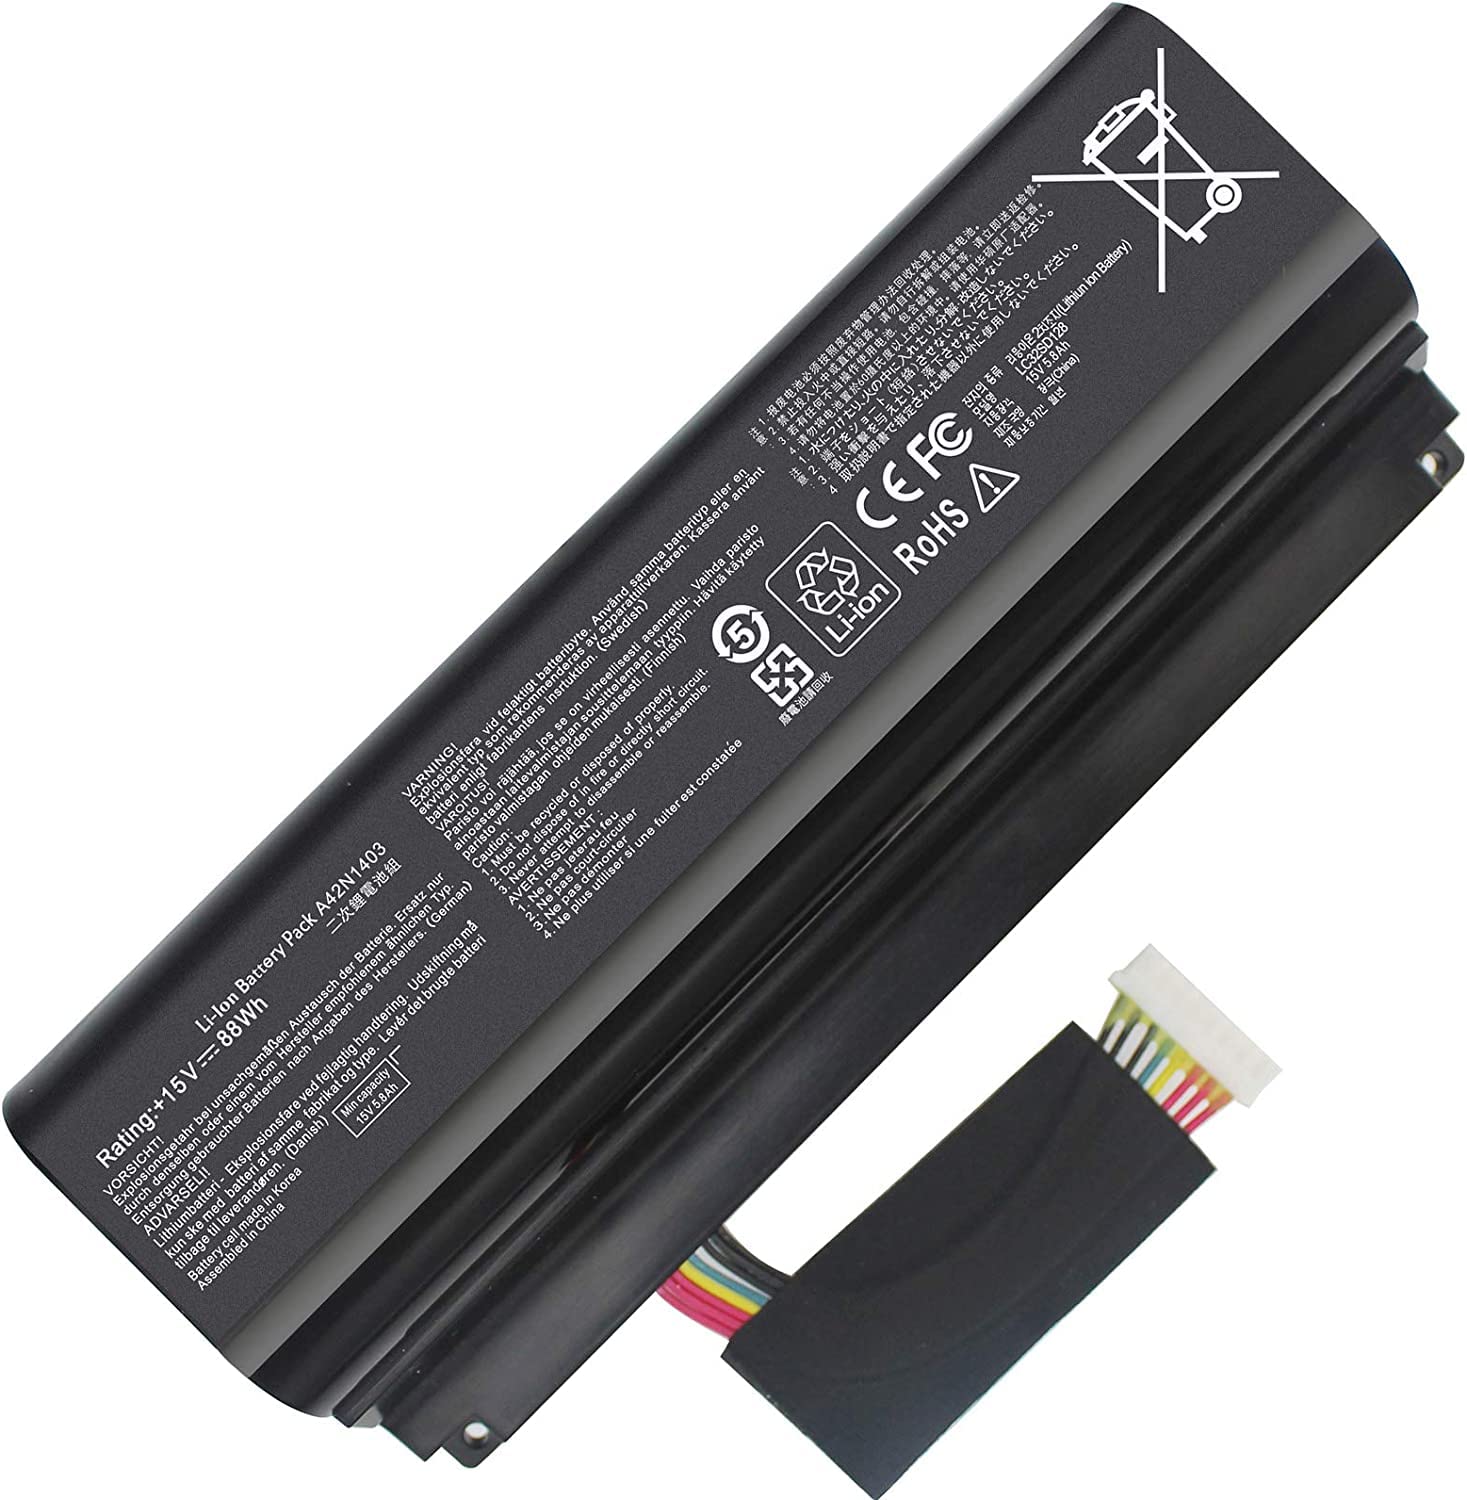 Laptop Battery Compatible for A42N1403 Battery for GFX71JY 17.3" GFX71JY4710 G751 G751J G751JT G751JY G751JL G751JM GFX71JY GFX71JY4710 GFX71JY4710 G751J-BHI7T25 G751JL-BSI7T28